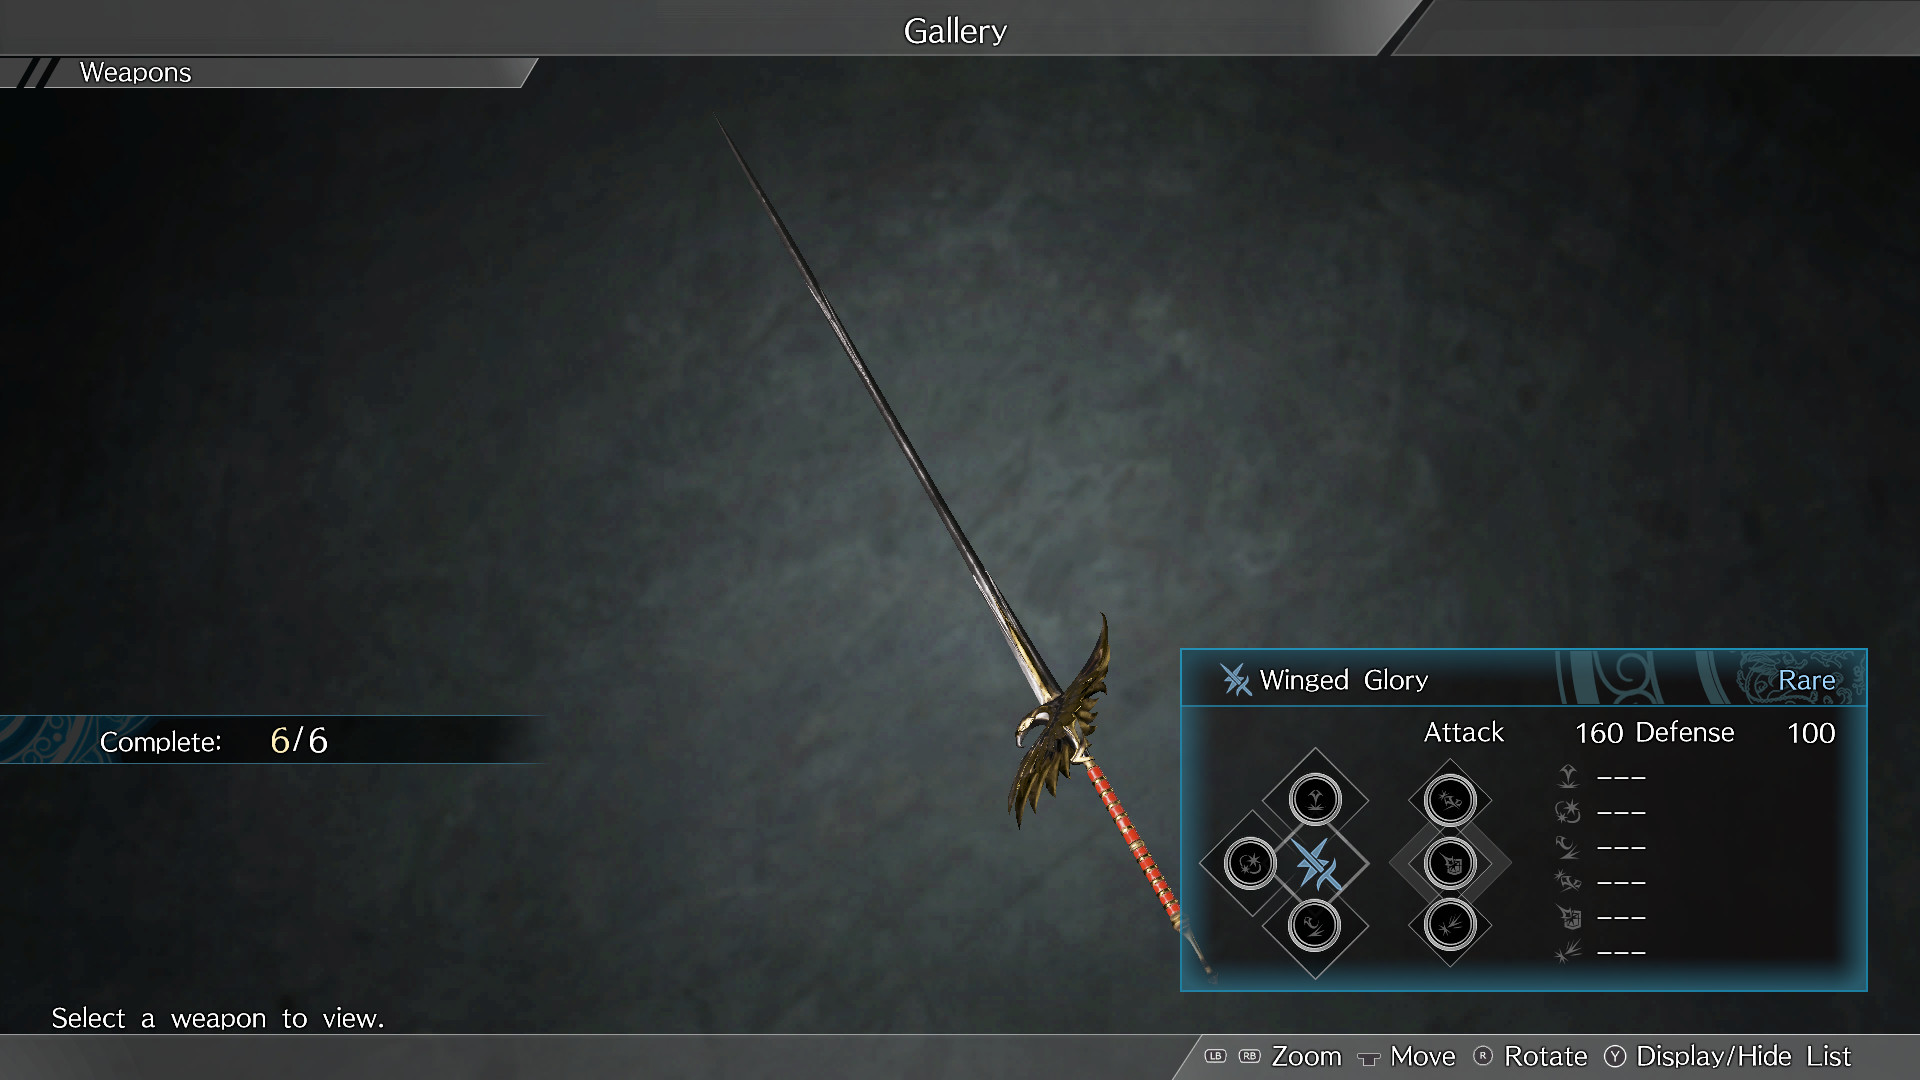 DYNASTY WARRIORS 9: Additional Weapon "Lightning Sword" / 追加武器「迅雷剣」 Featured Screenshot #1